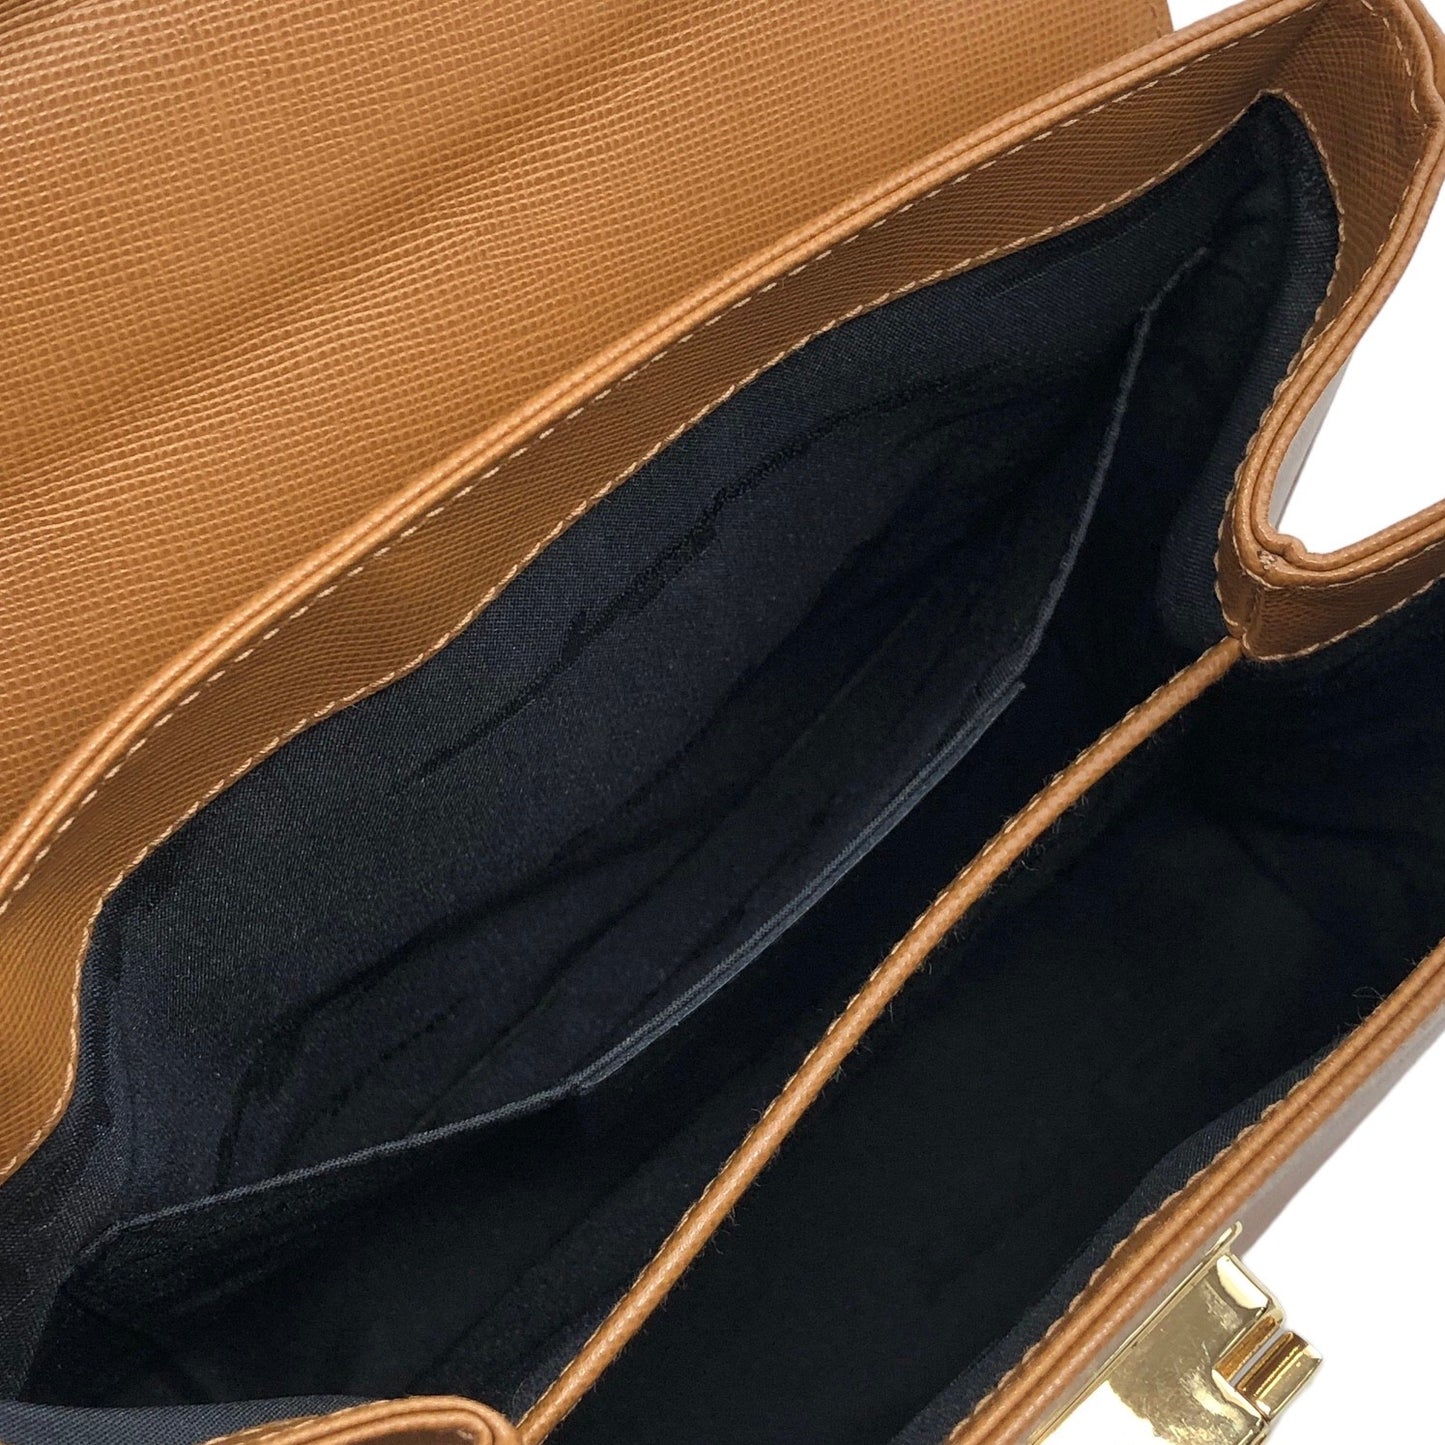 Salvatore Ferragamo Gancini  Leather Two-way Handbag Shoulder bag Light Brown Vintage 8u32cx